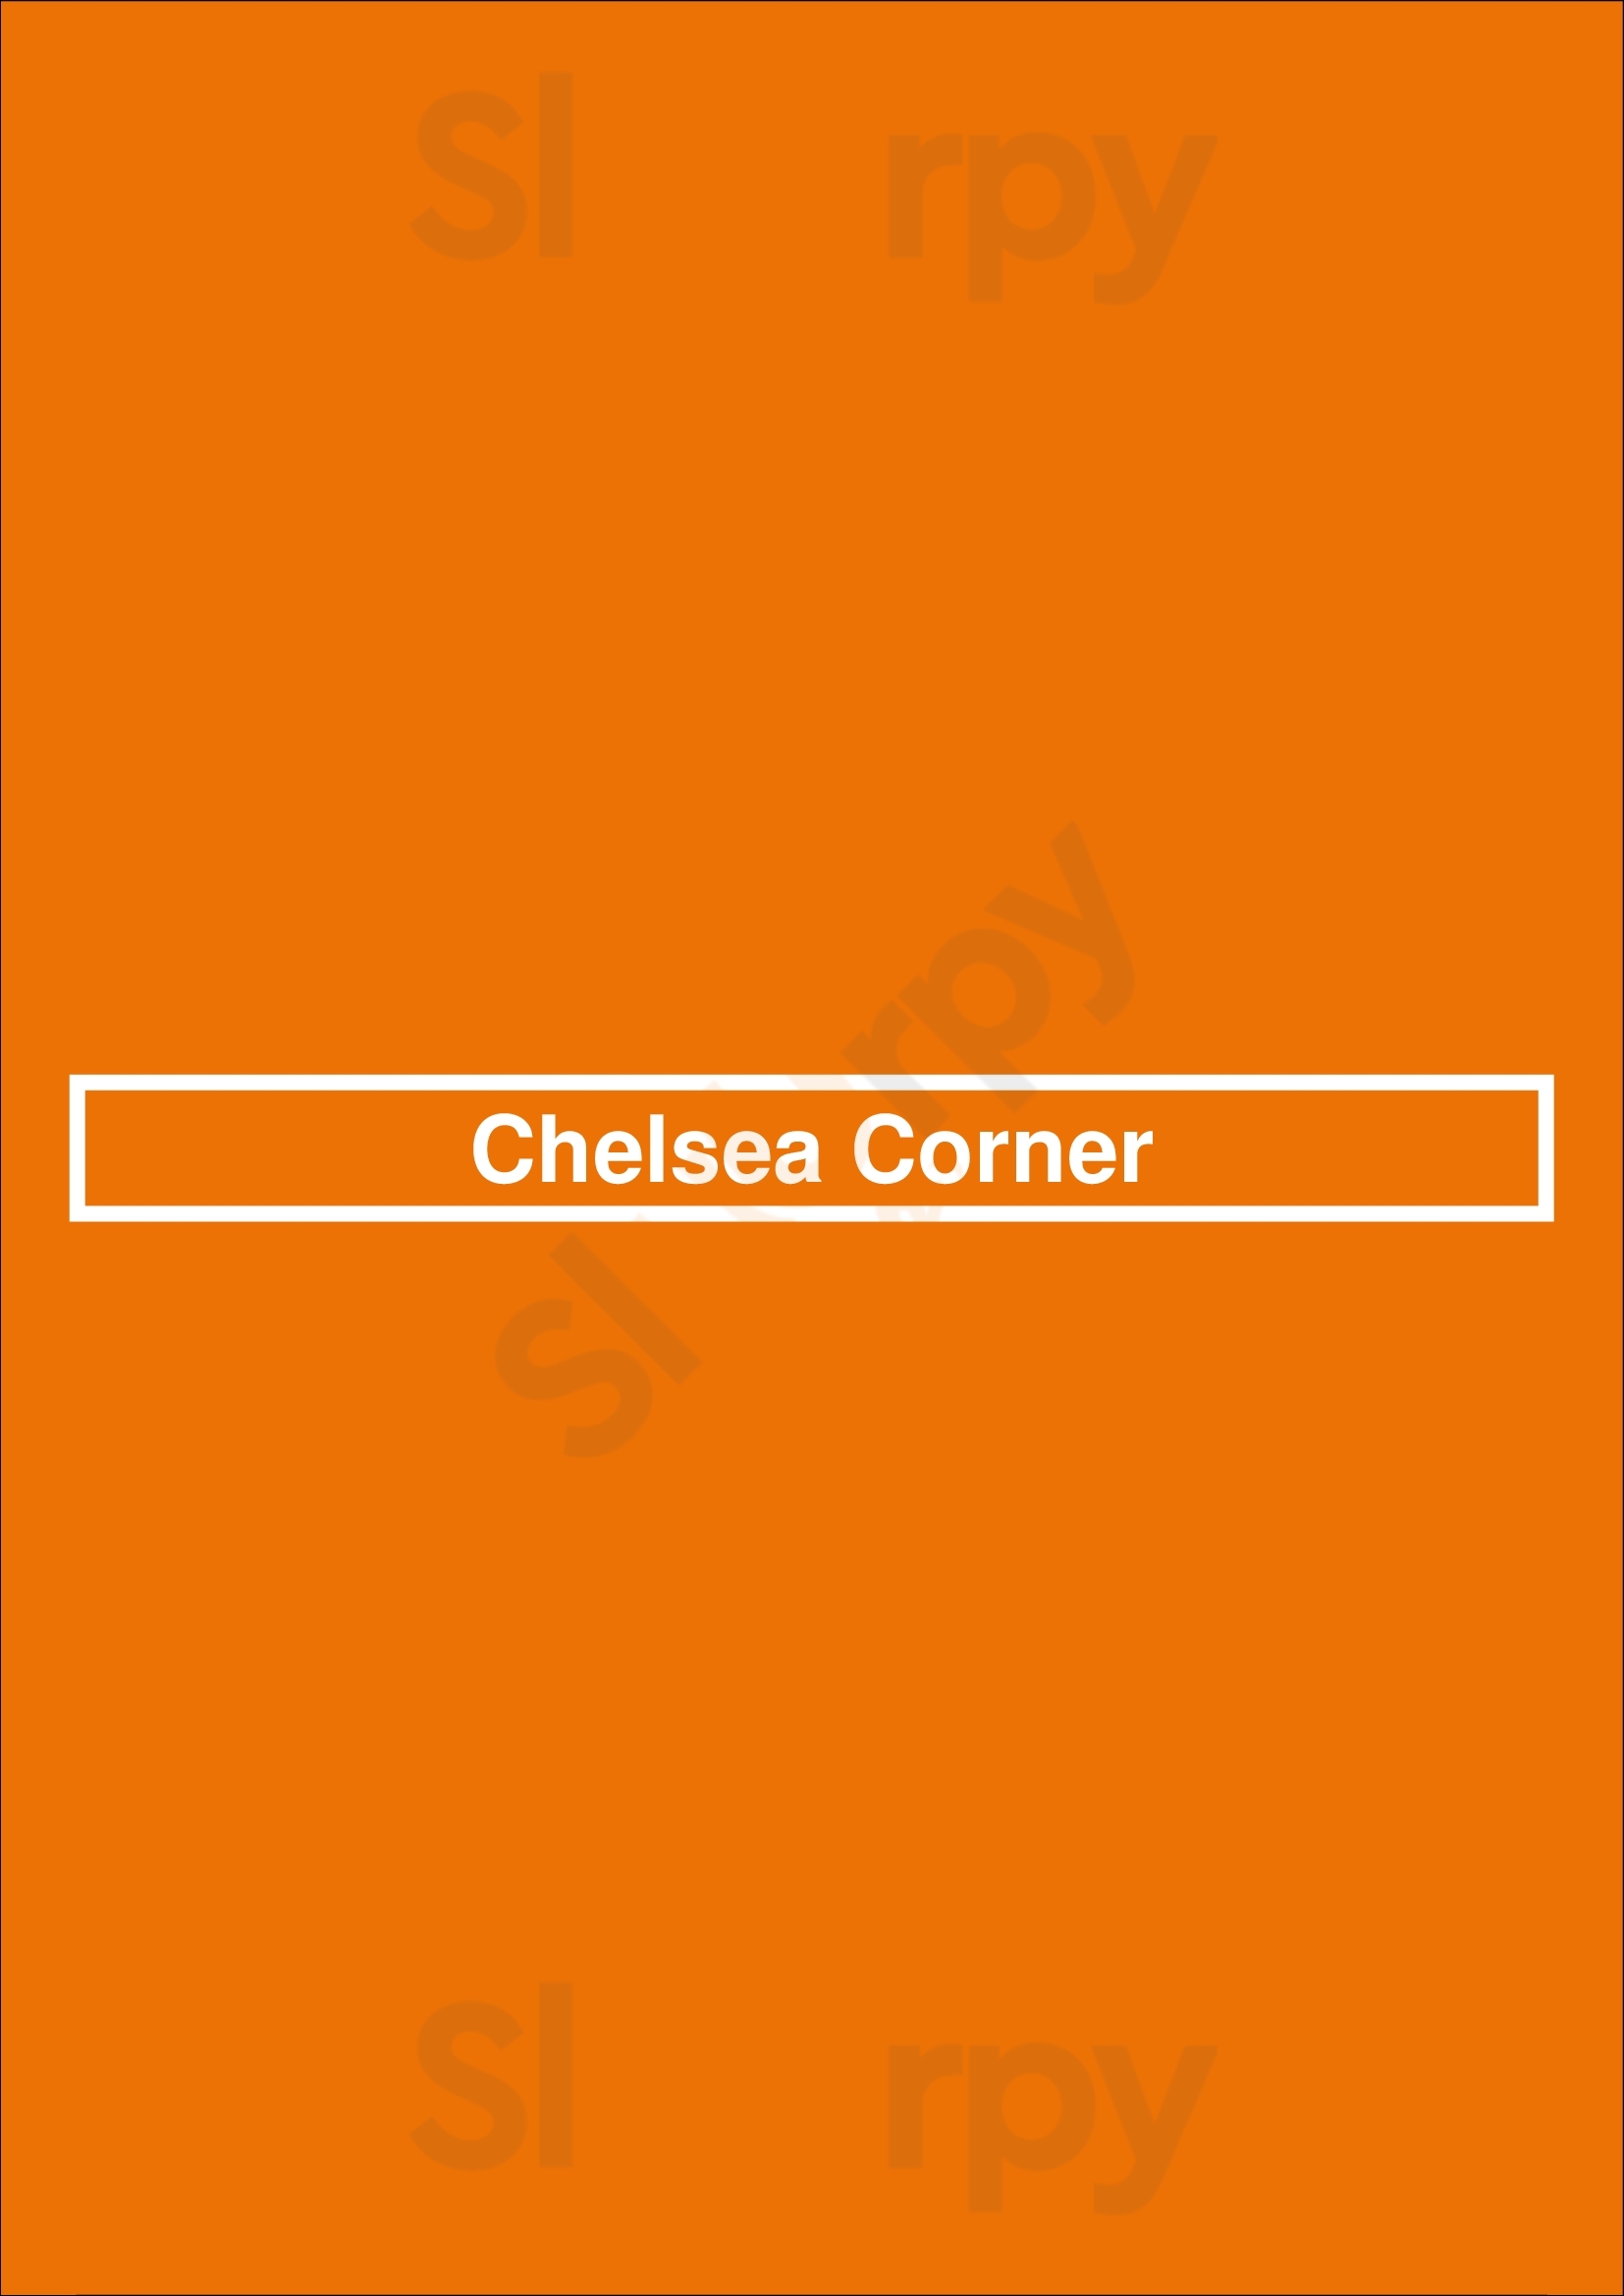 Chelsea Corner Dallas Menu - 1